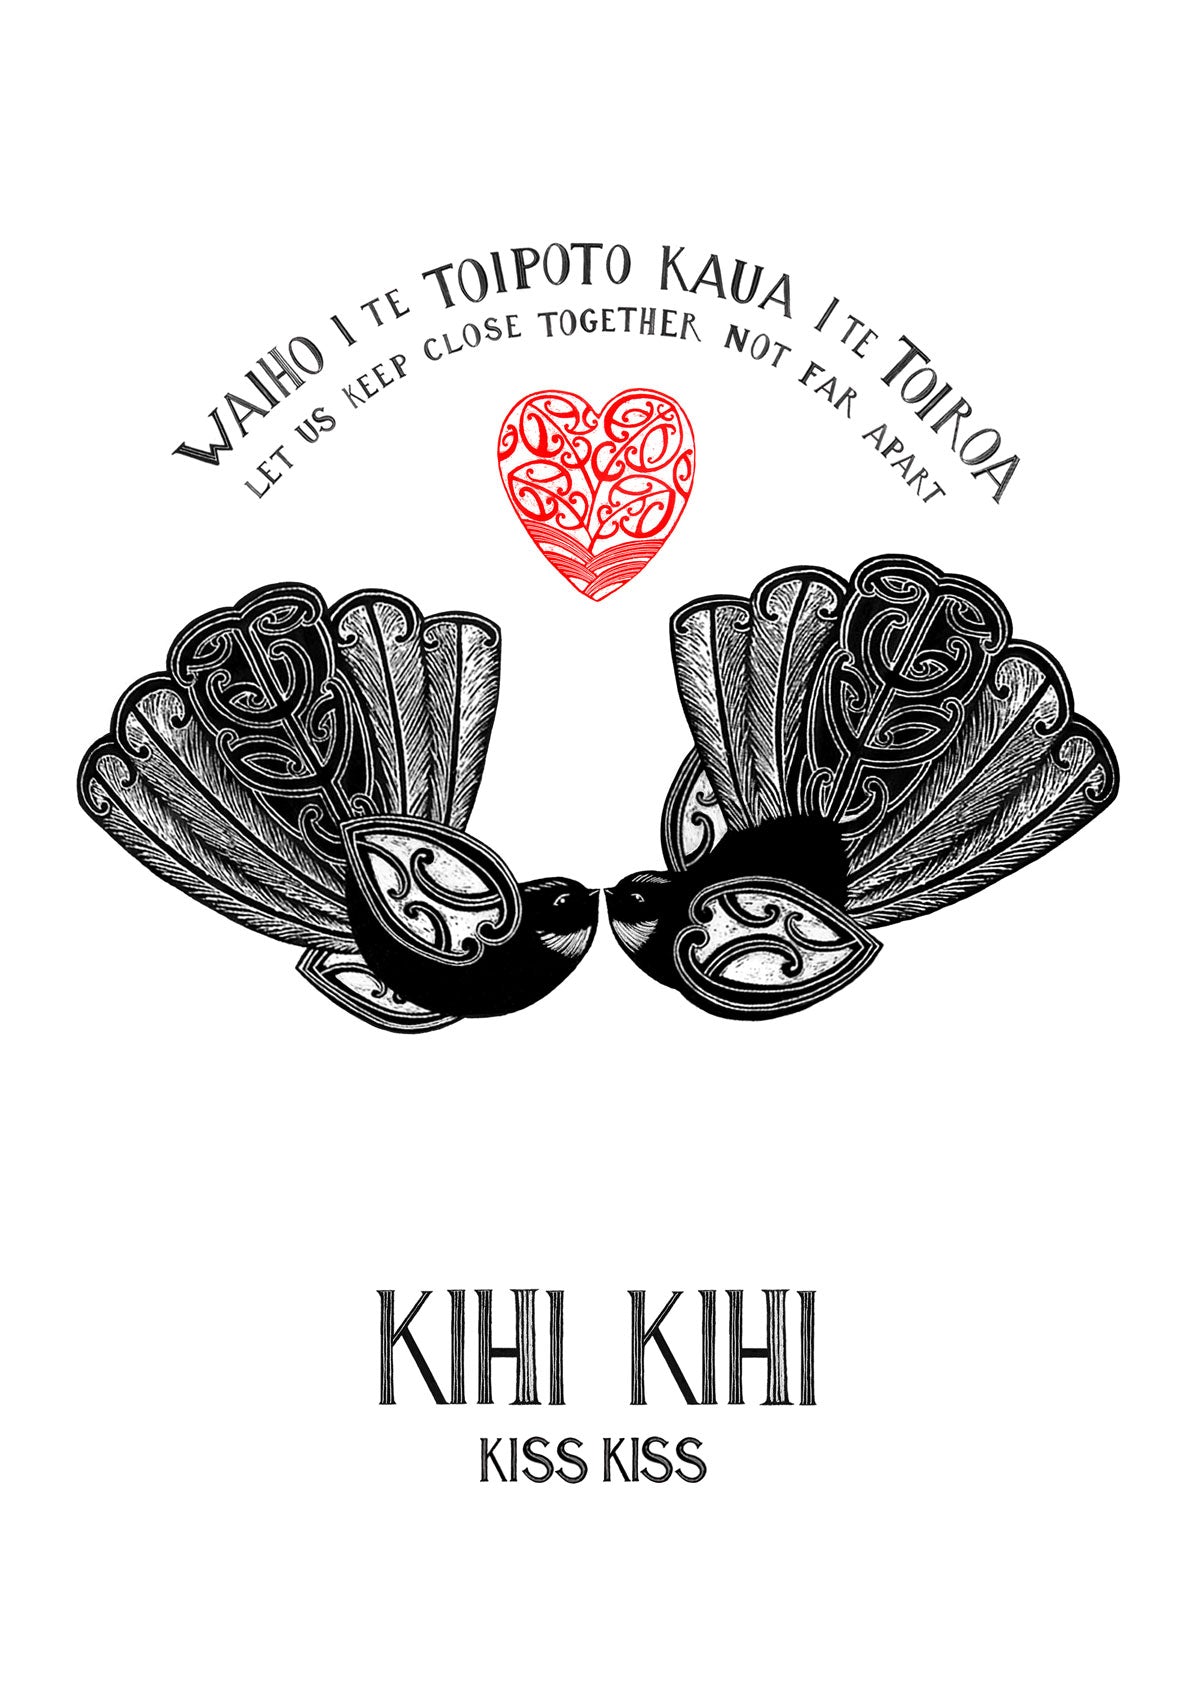 kihi kihi kiss kiss nz wall art print by Amber Smith. With piwakawaka fantail and koru aroha love heart. Te reo maori and english inscription, let us keep close together not far apart.